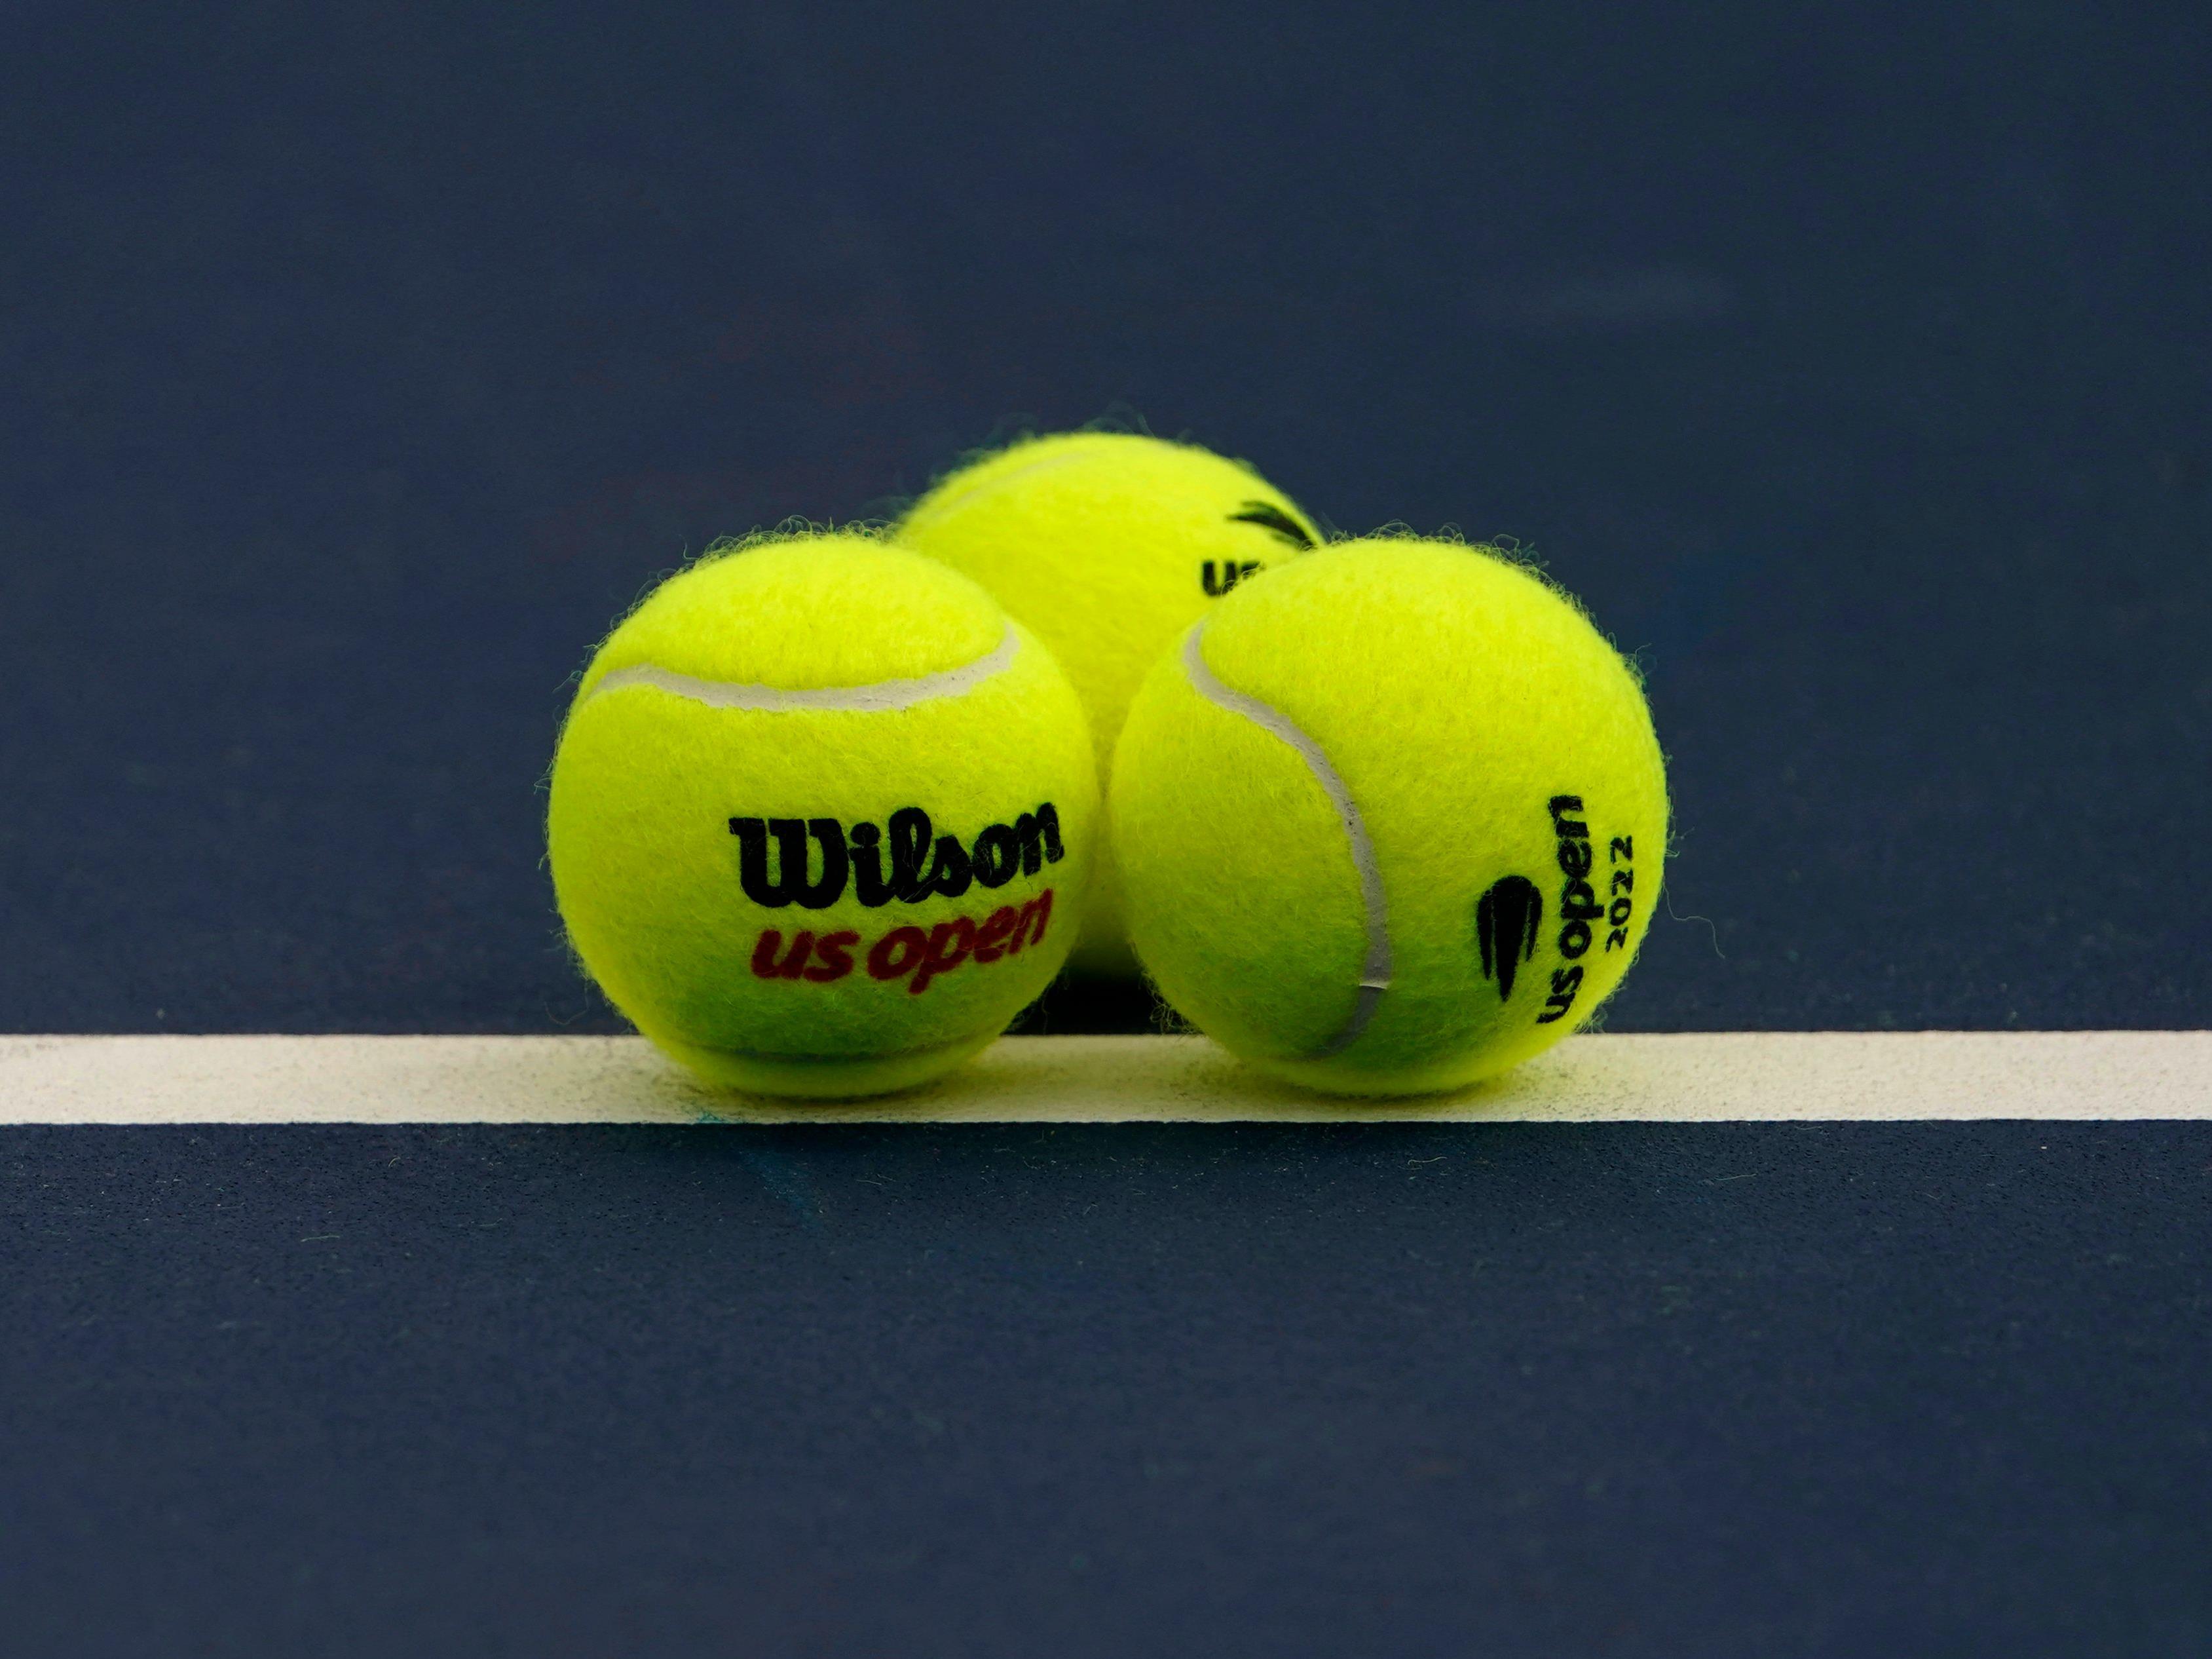 https://images.radio-canada.ca/v1/ici-premiere/4x3/balles-tennis-wilson-us-open-70877.jpg